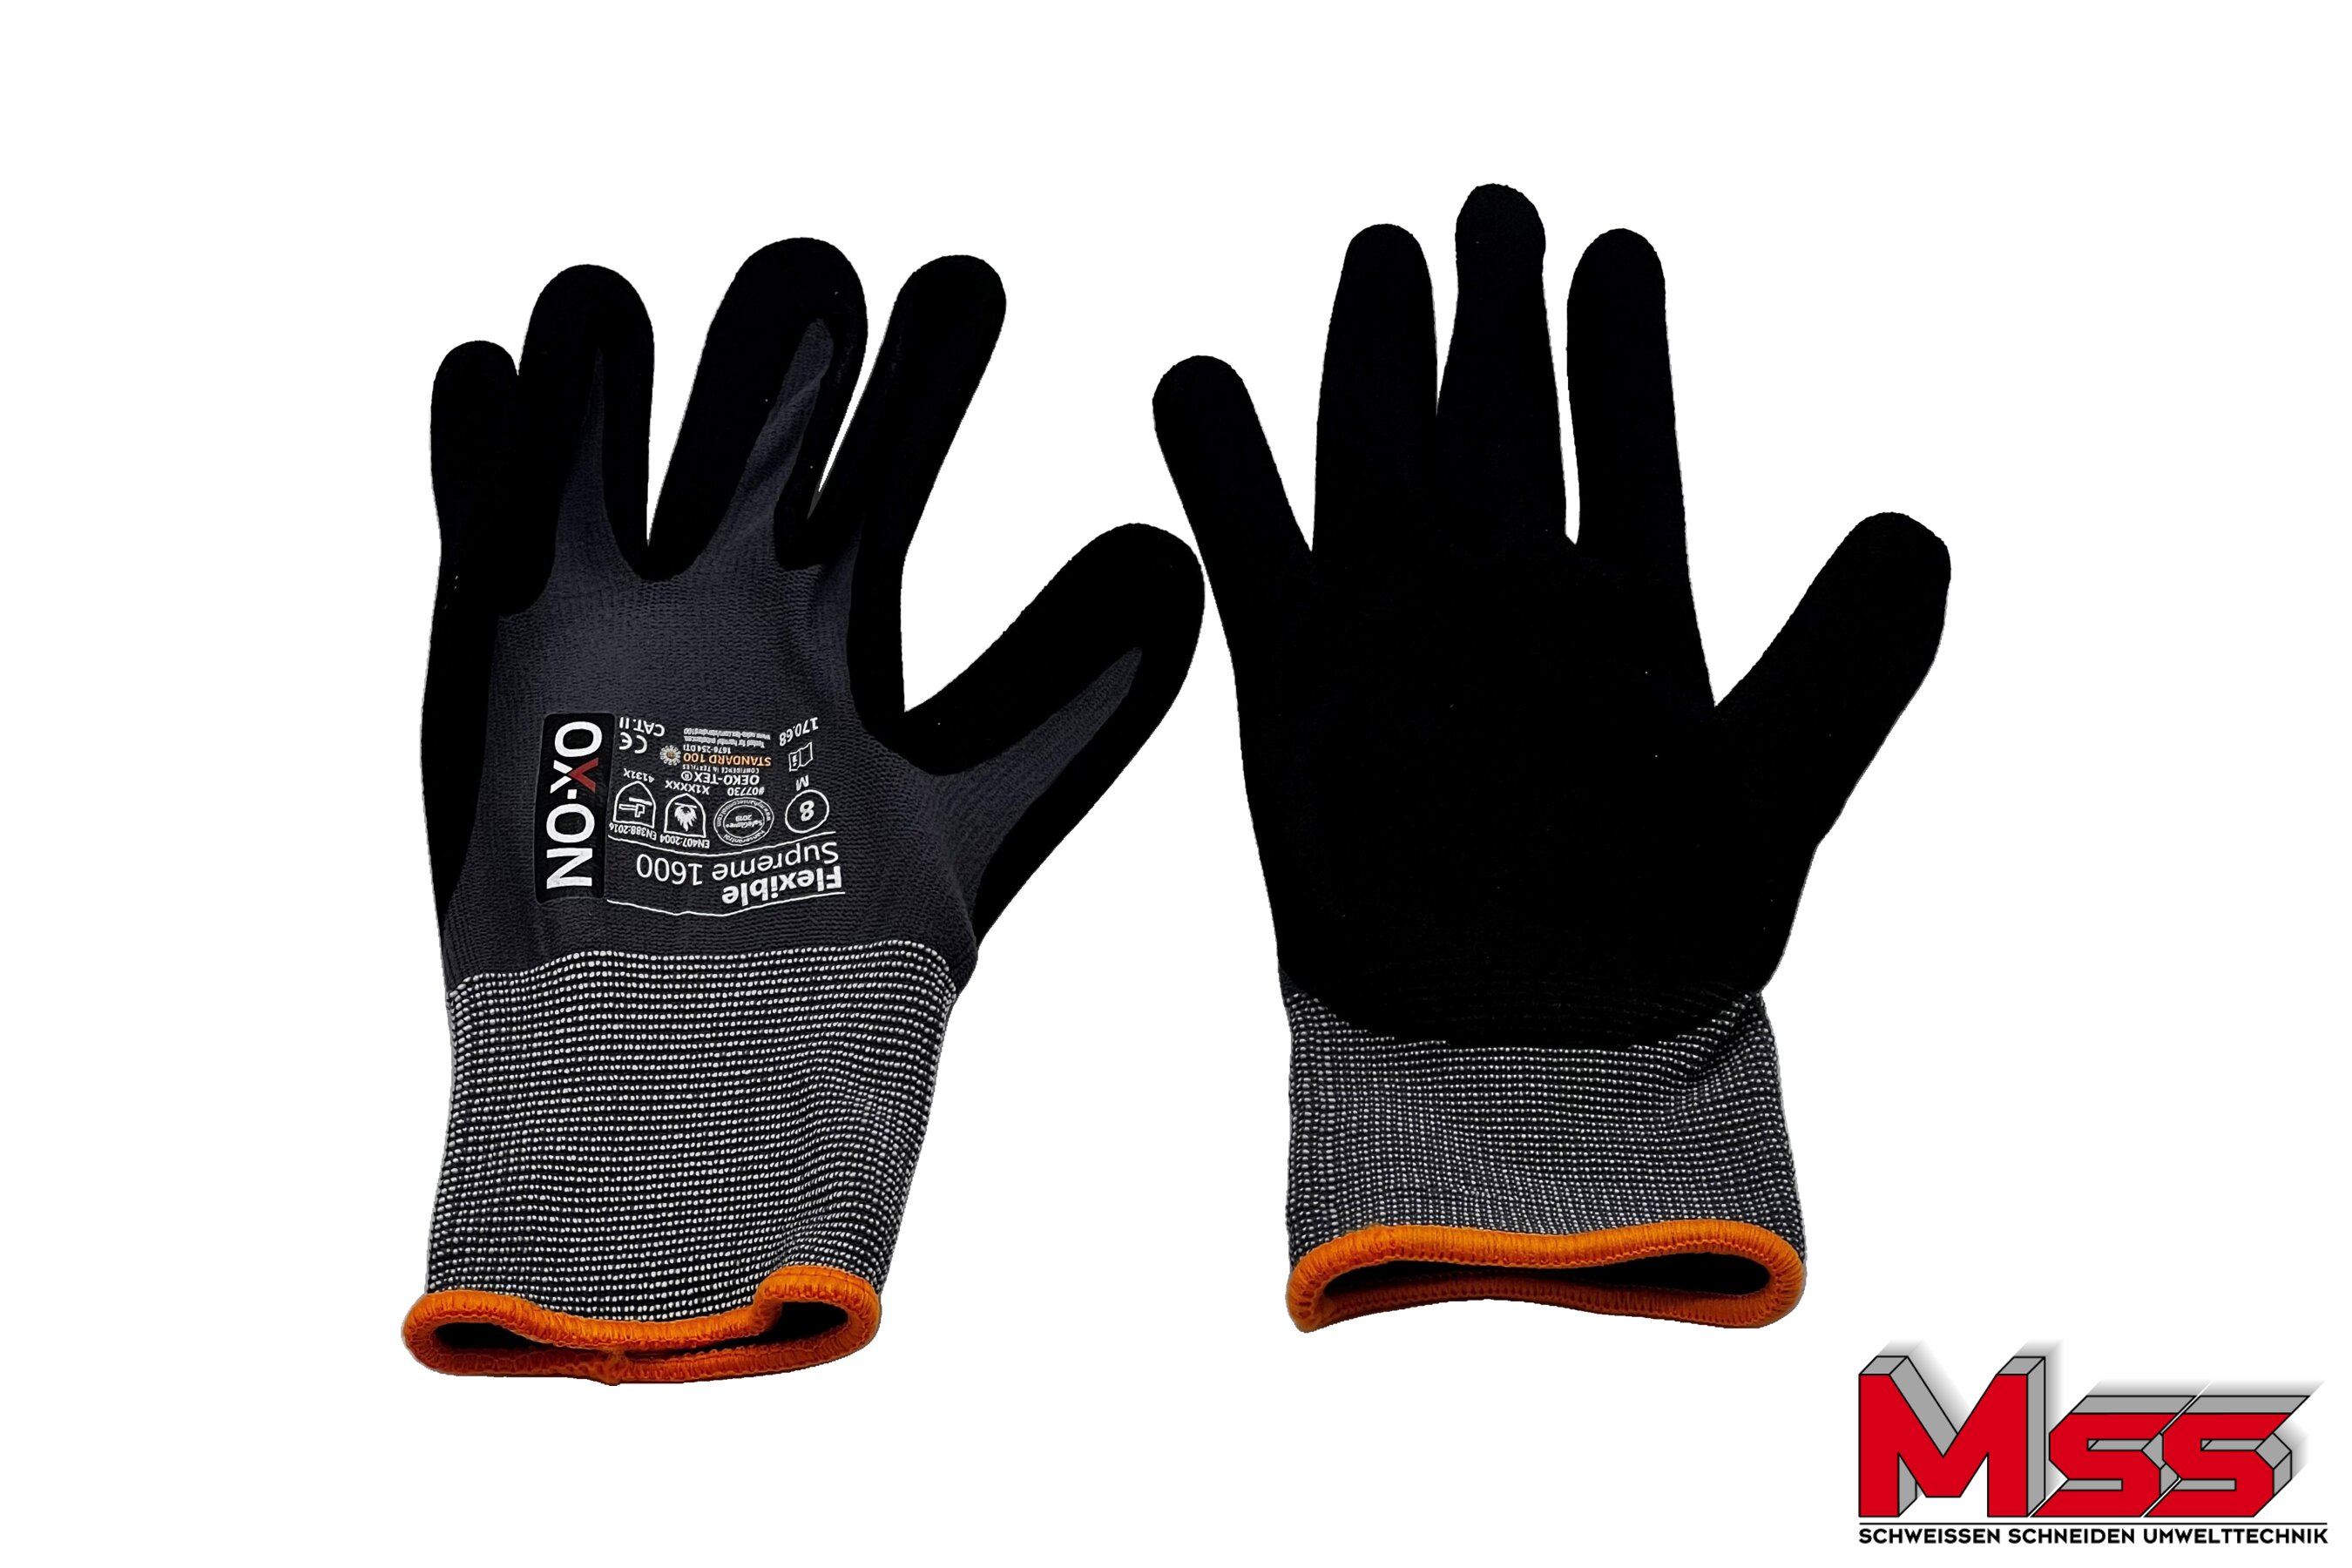 Nylon Handschuhe mit hohem Tragekomfort, 0,89 €